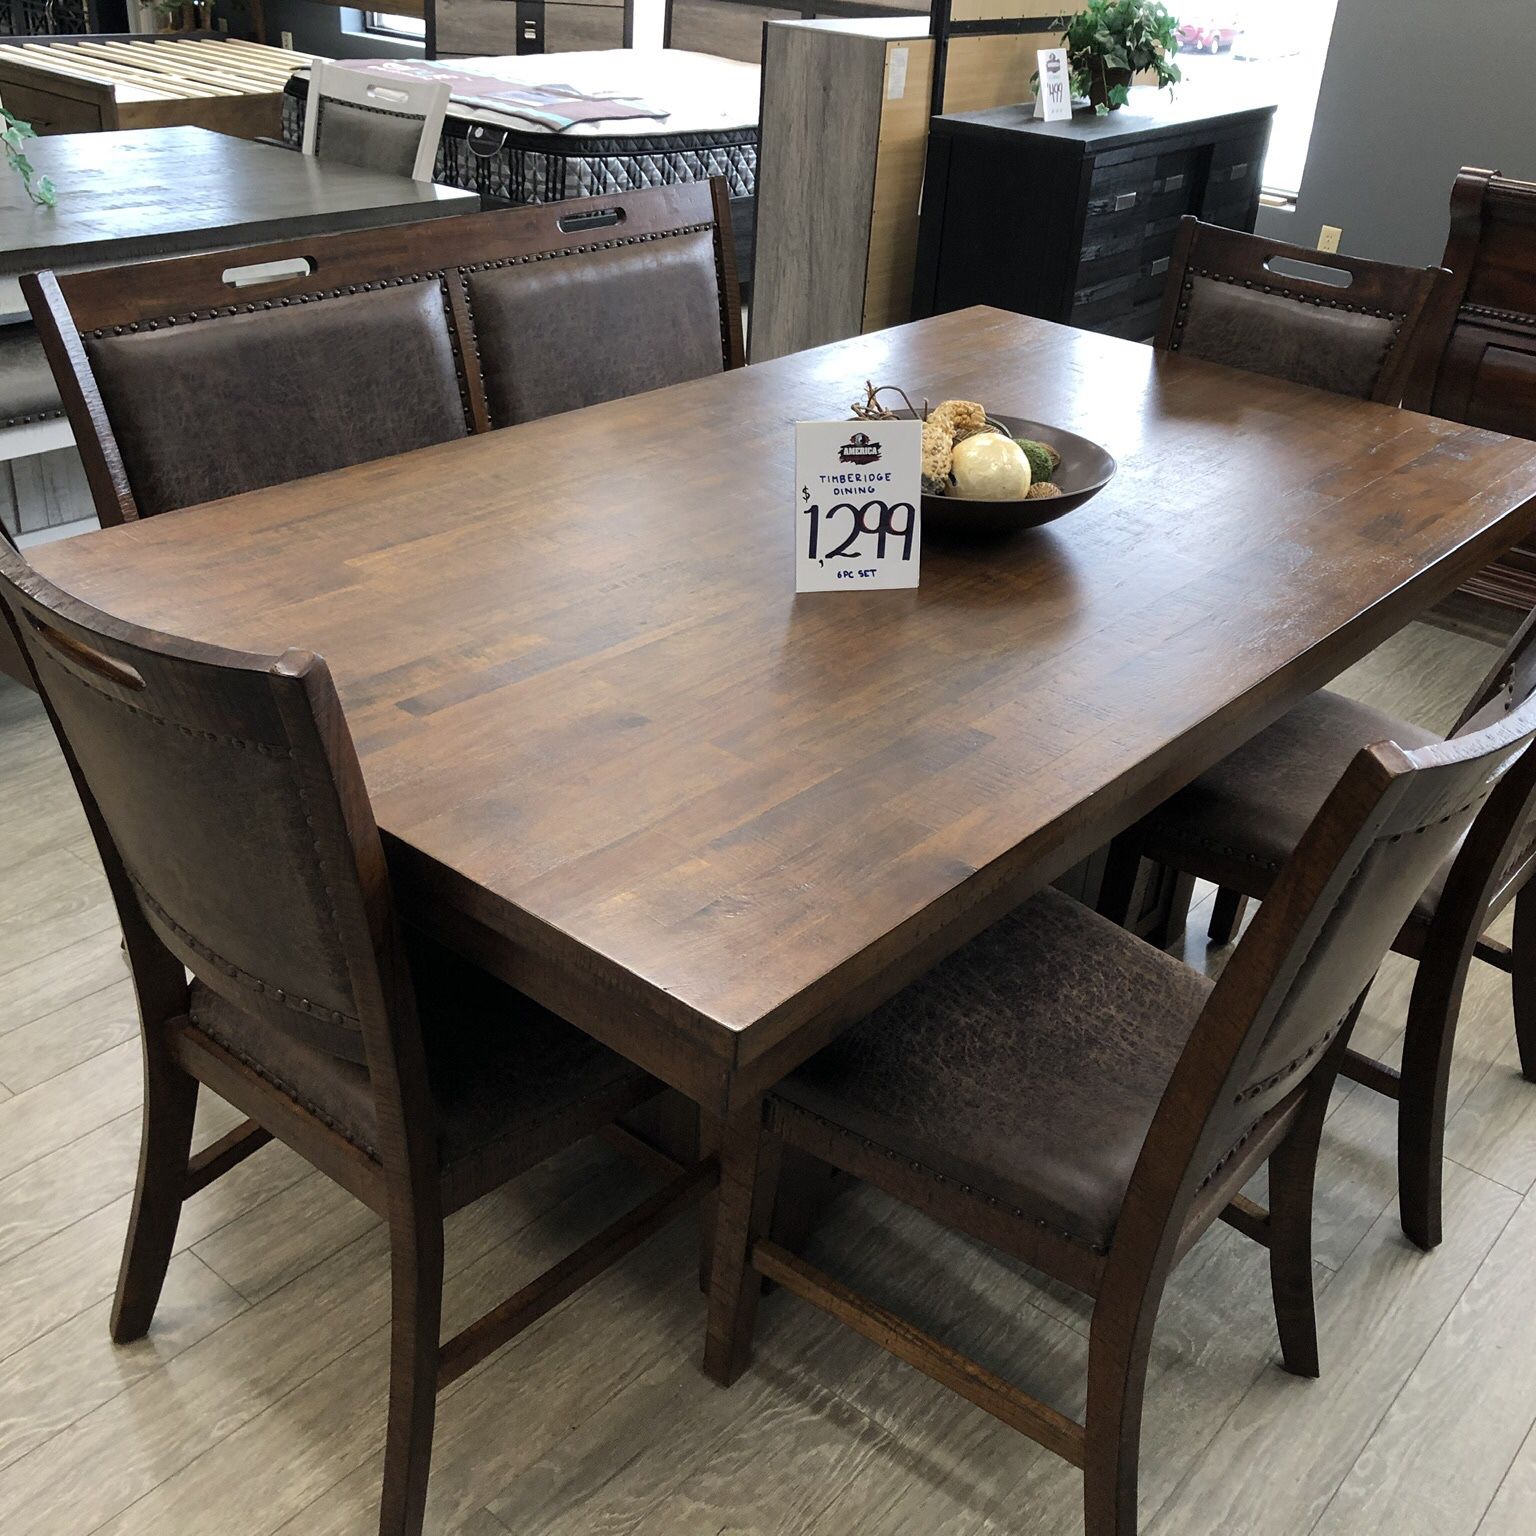 Brown Wood Rustic Dining Table Set w Base Storage - Timberidge 